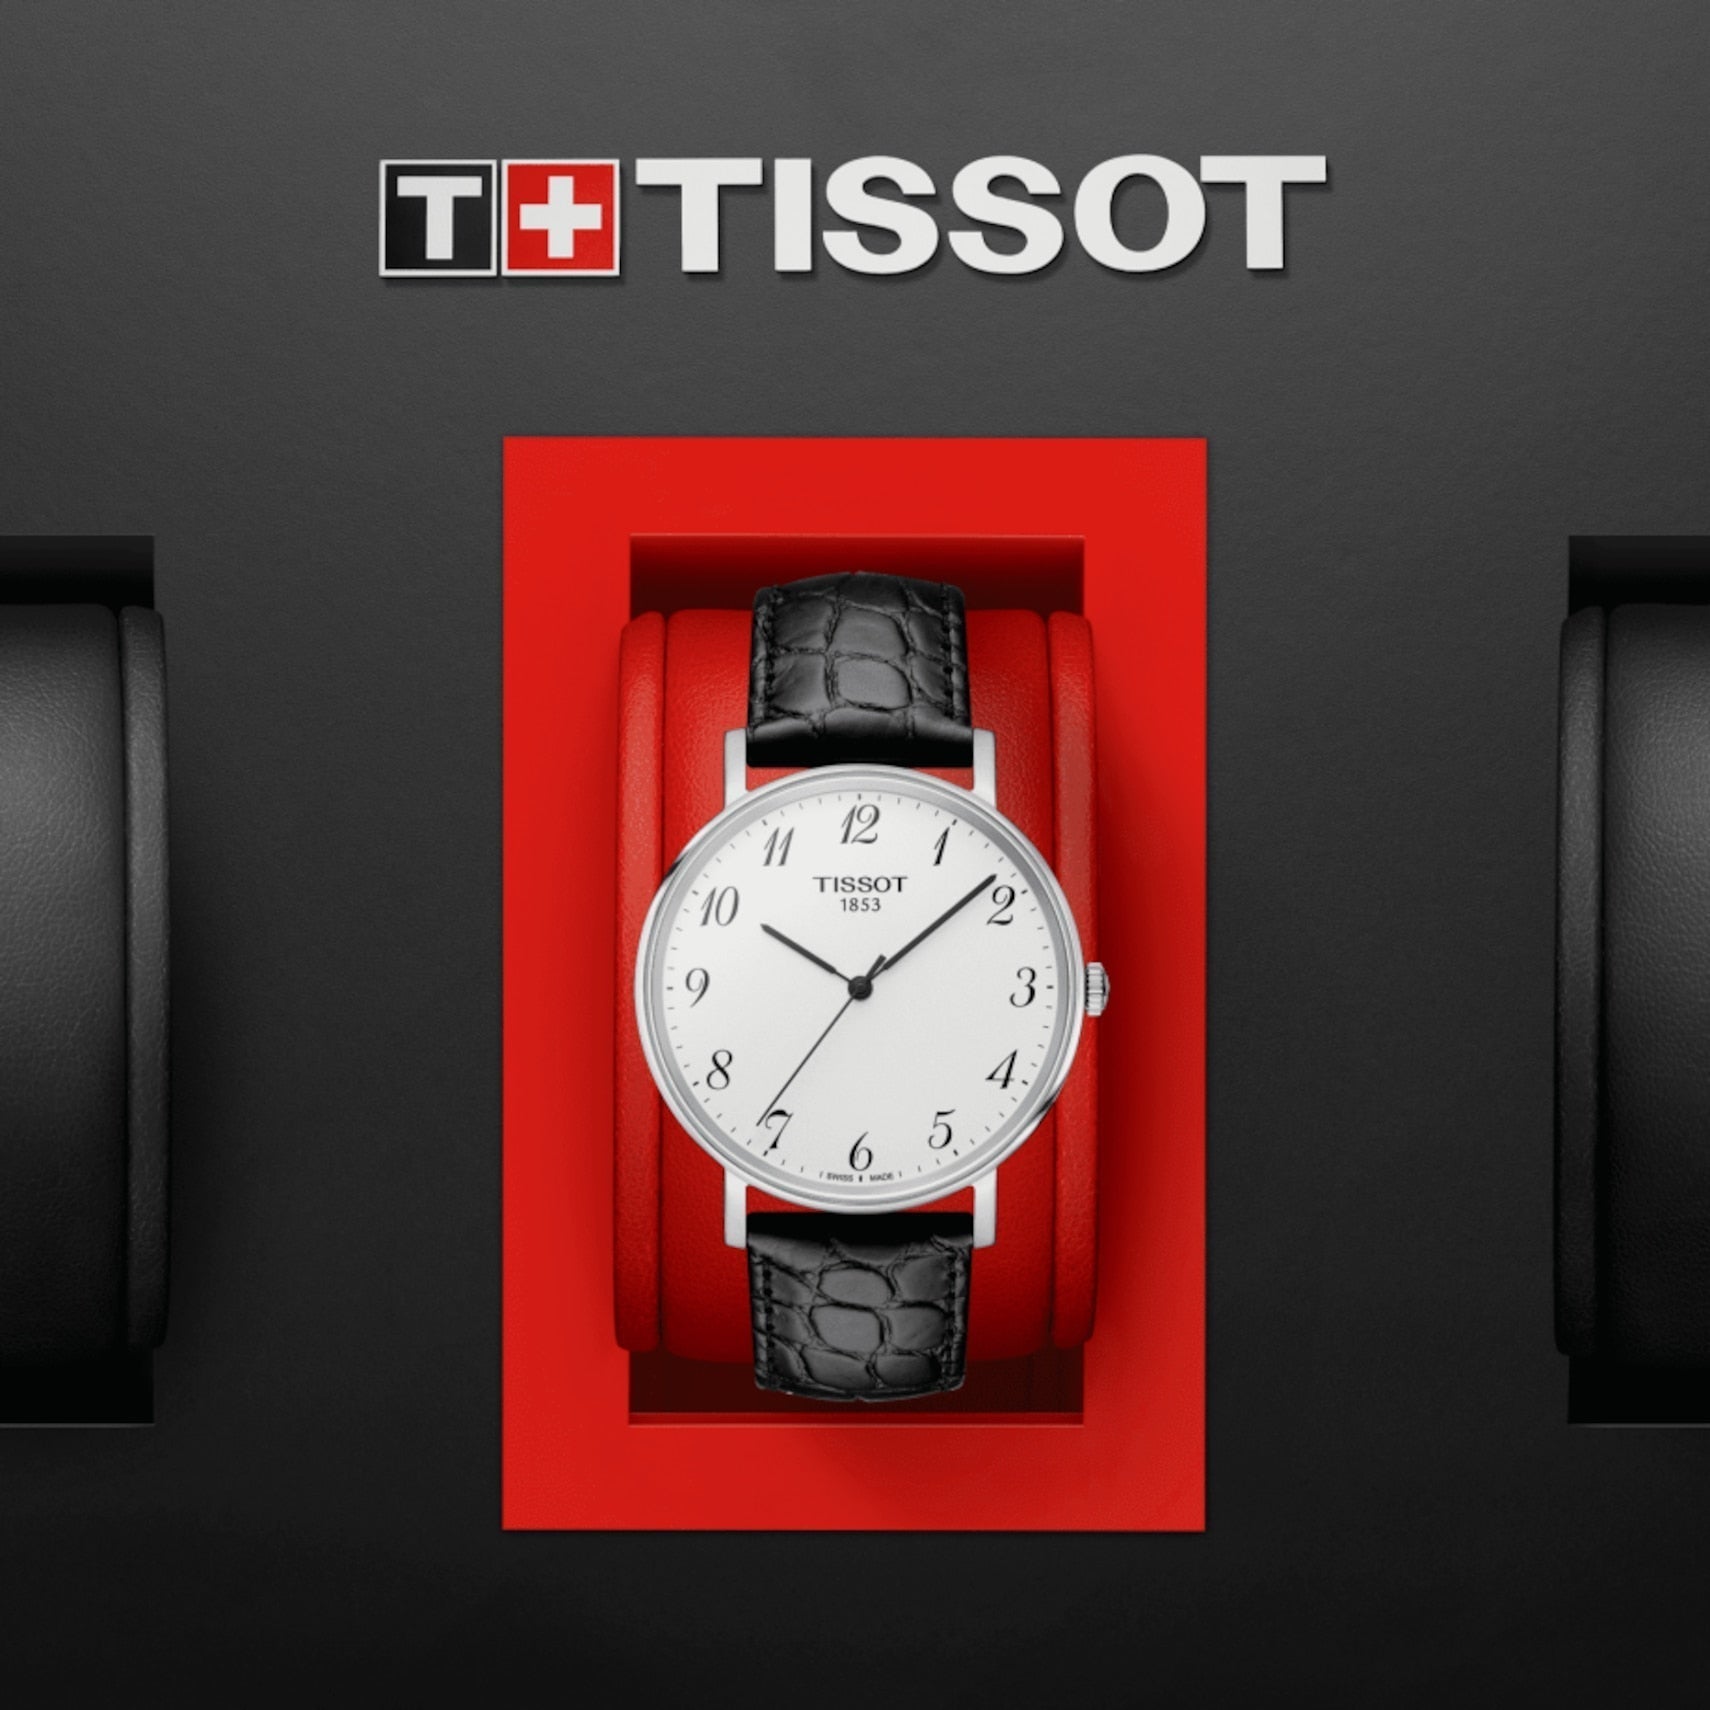 Tissot Everytime Desire Medium Watch For Men - T109.410.16.032.00